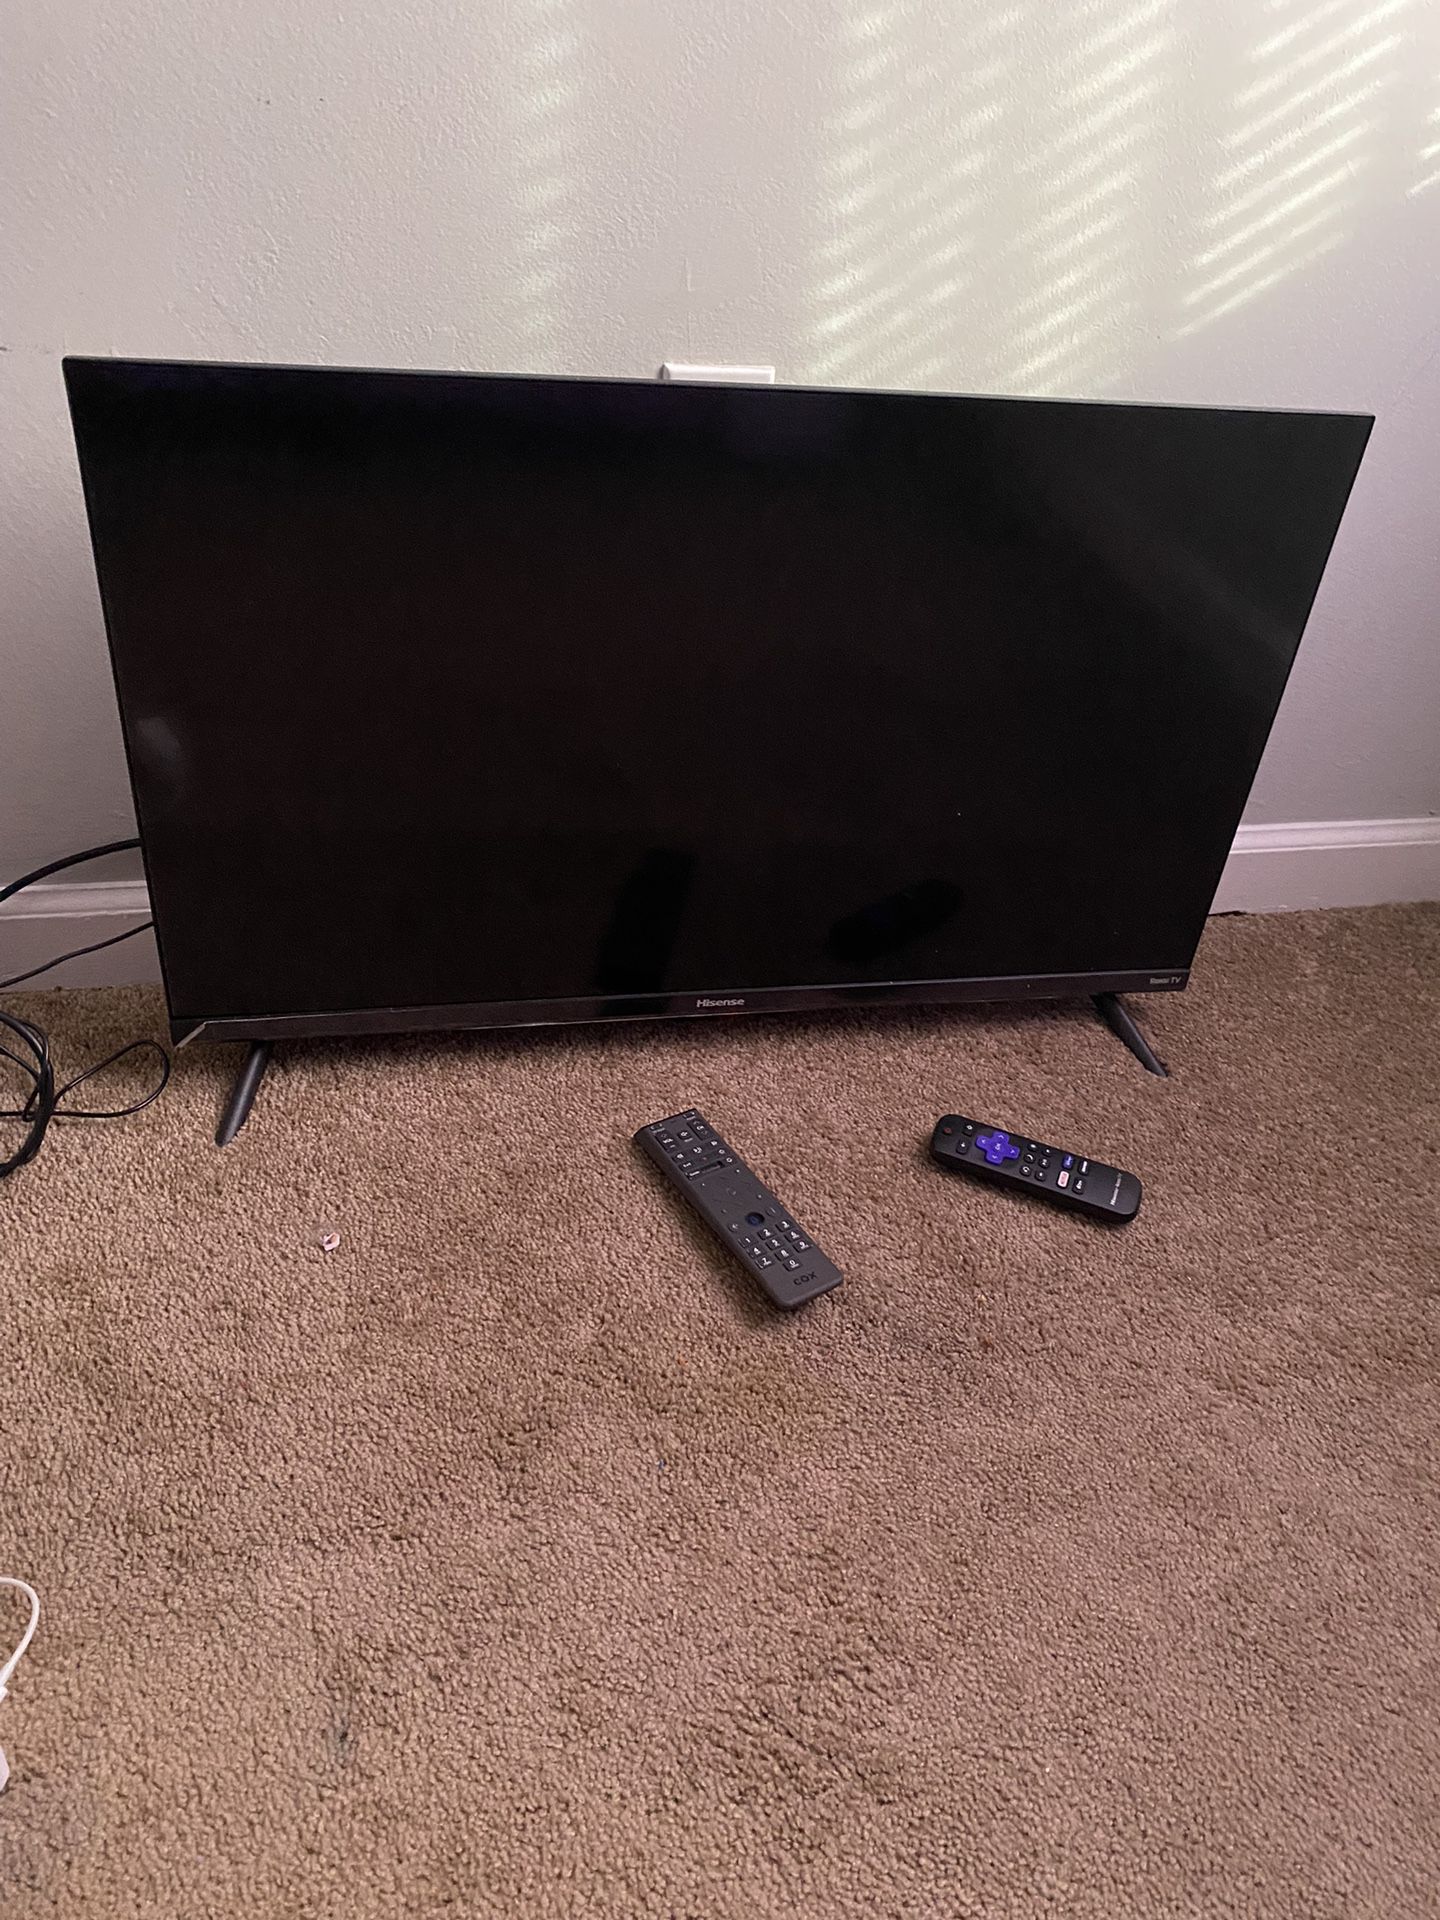 Two 40” Flat Screen TV